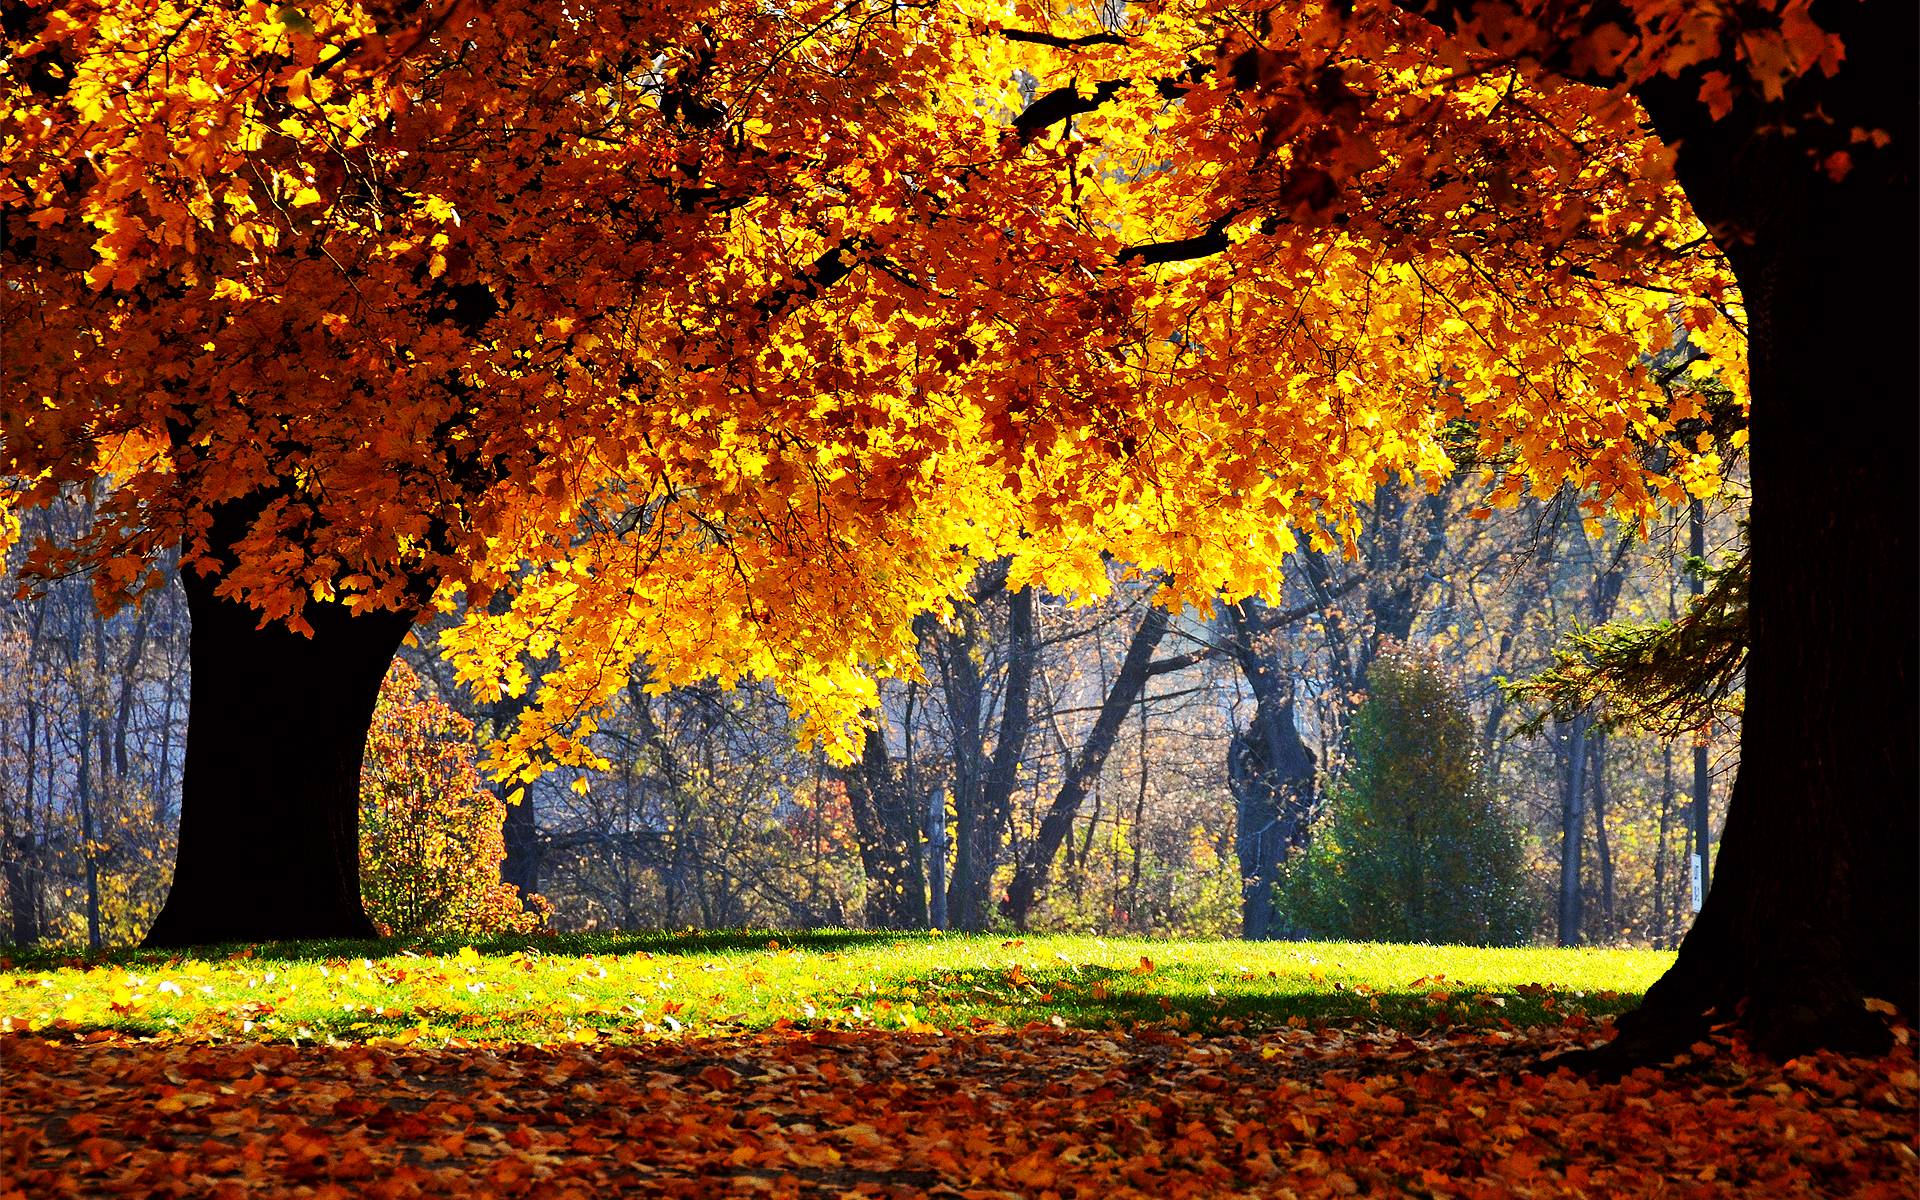 Natural Autumn Landscape HD Wallpaper Background